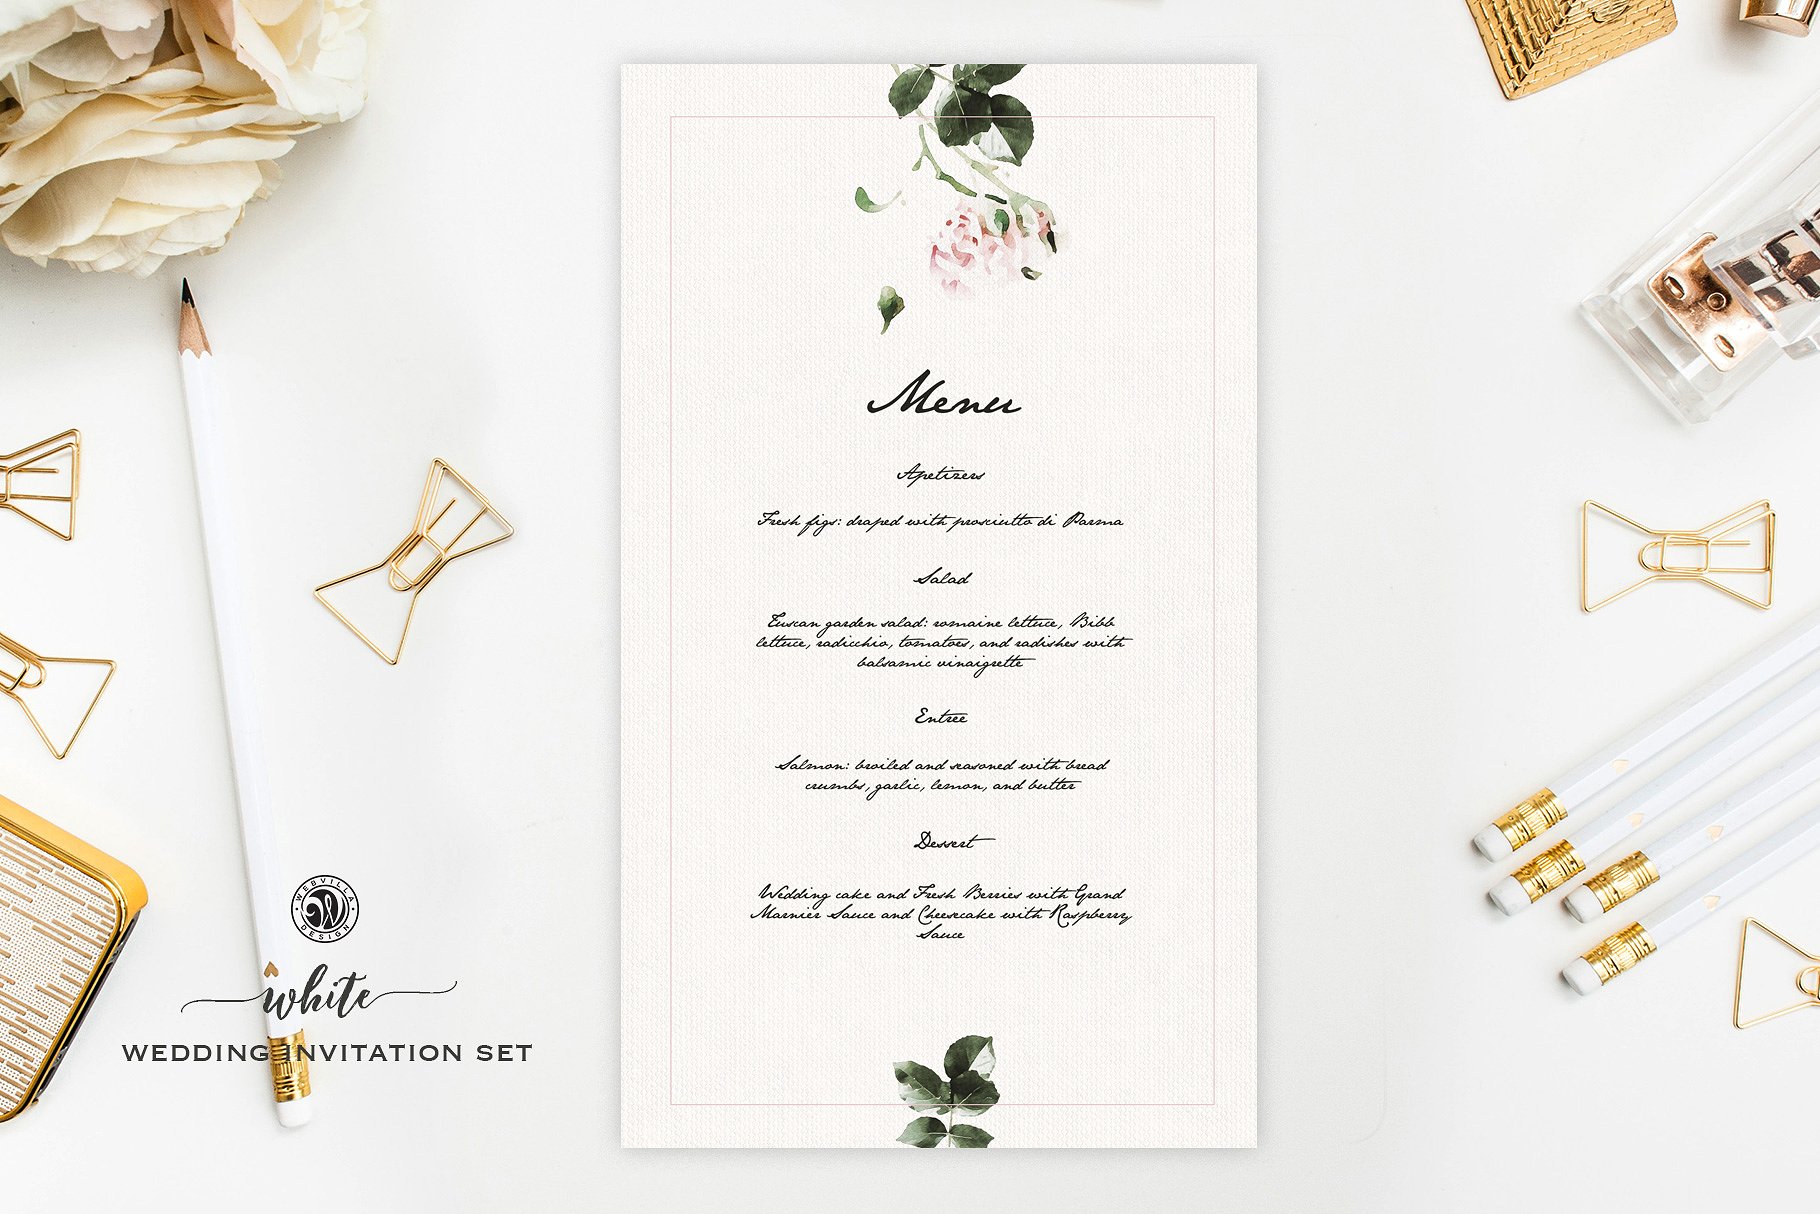 白色结婚邀请函设计模板素材 White Wedding Invitation Set插图(3)